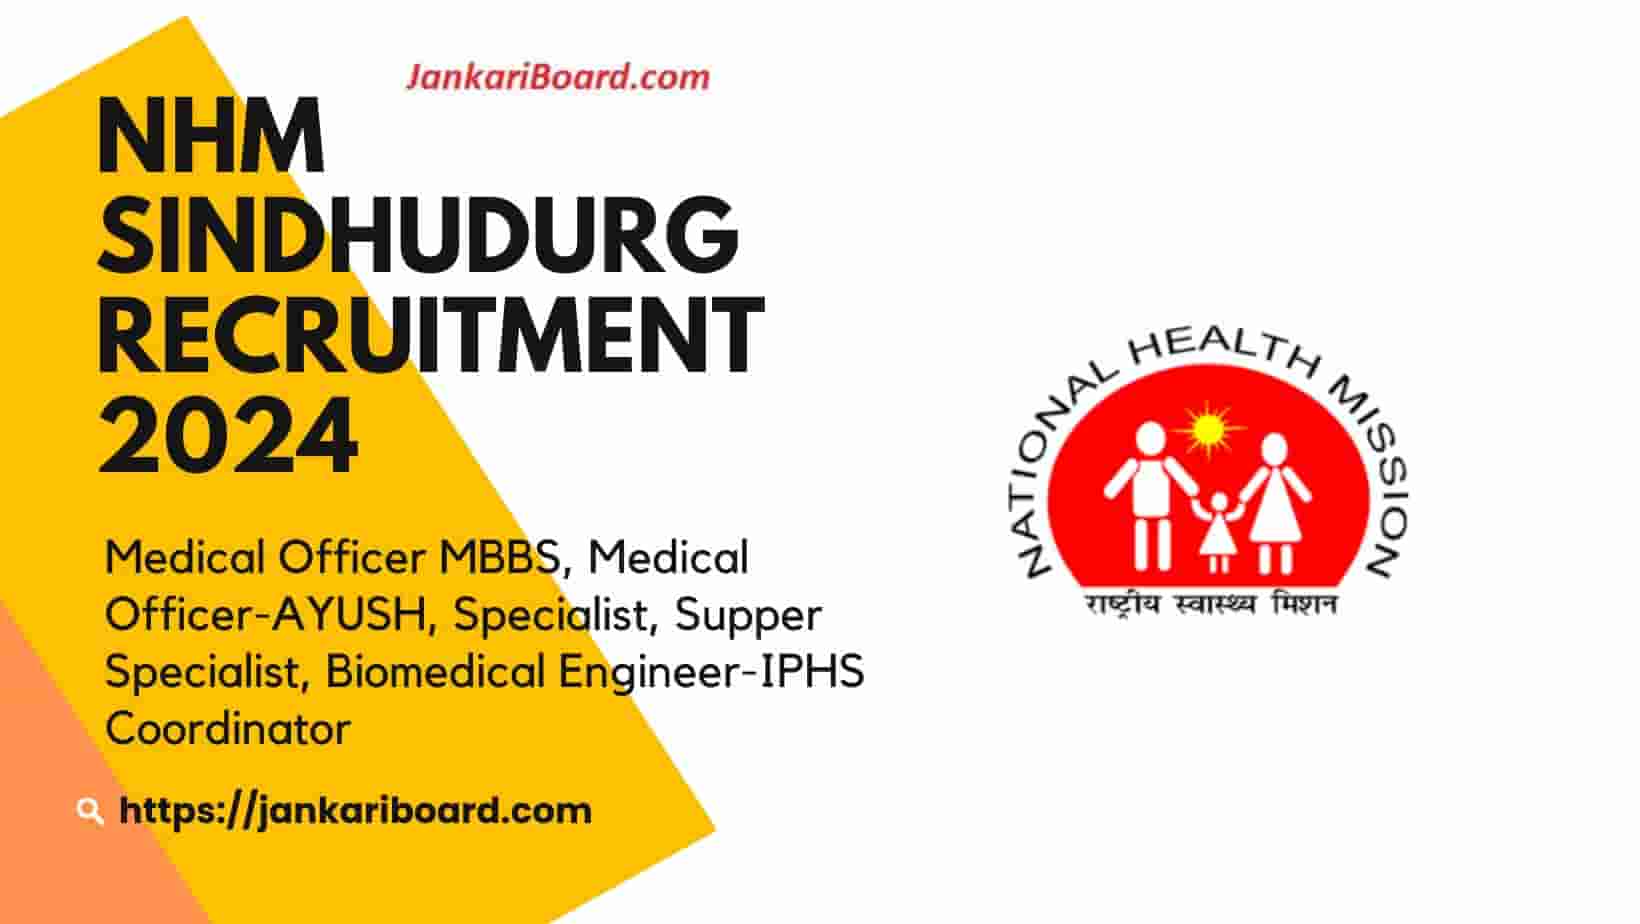 NHM Sindhudurg Recruitment 2024